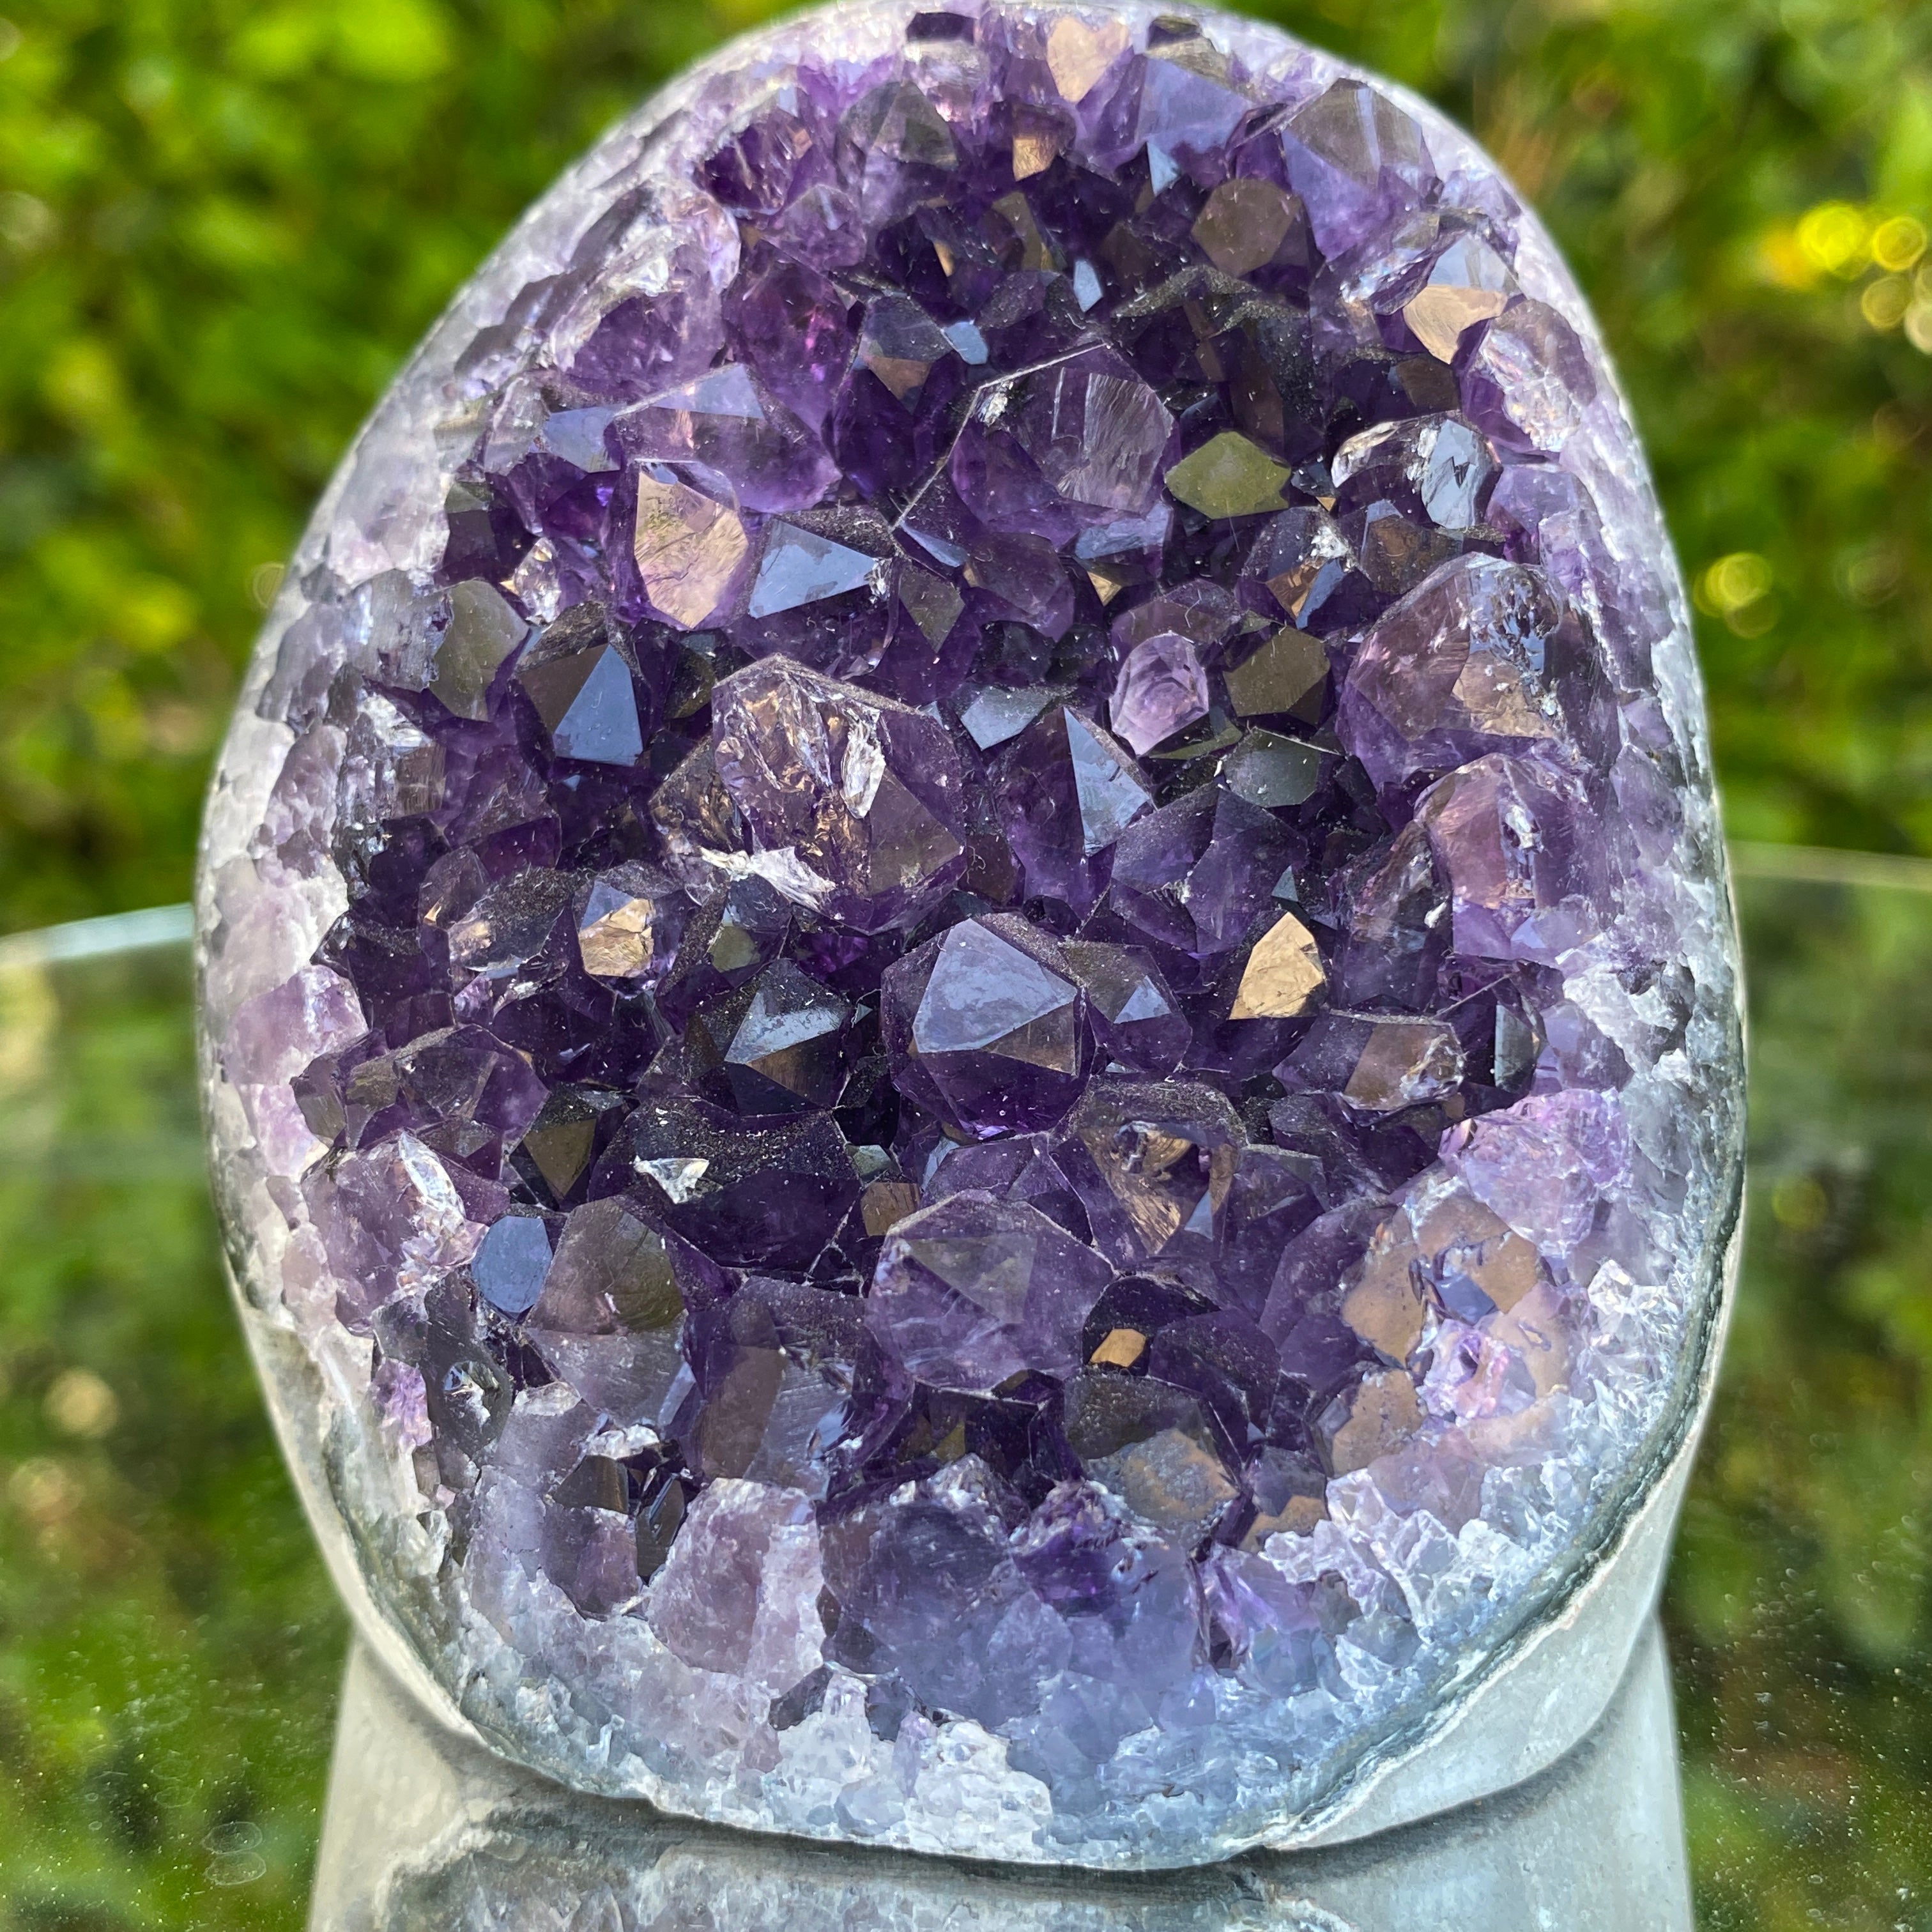 472g 8x8x7cm Grade A+ Big Smooth Crystal Purple Amethyst Geode from Uruguay